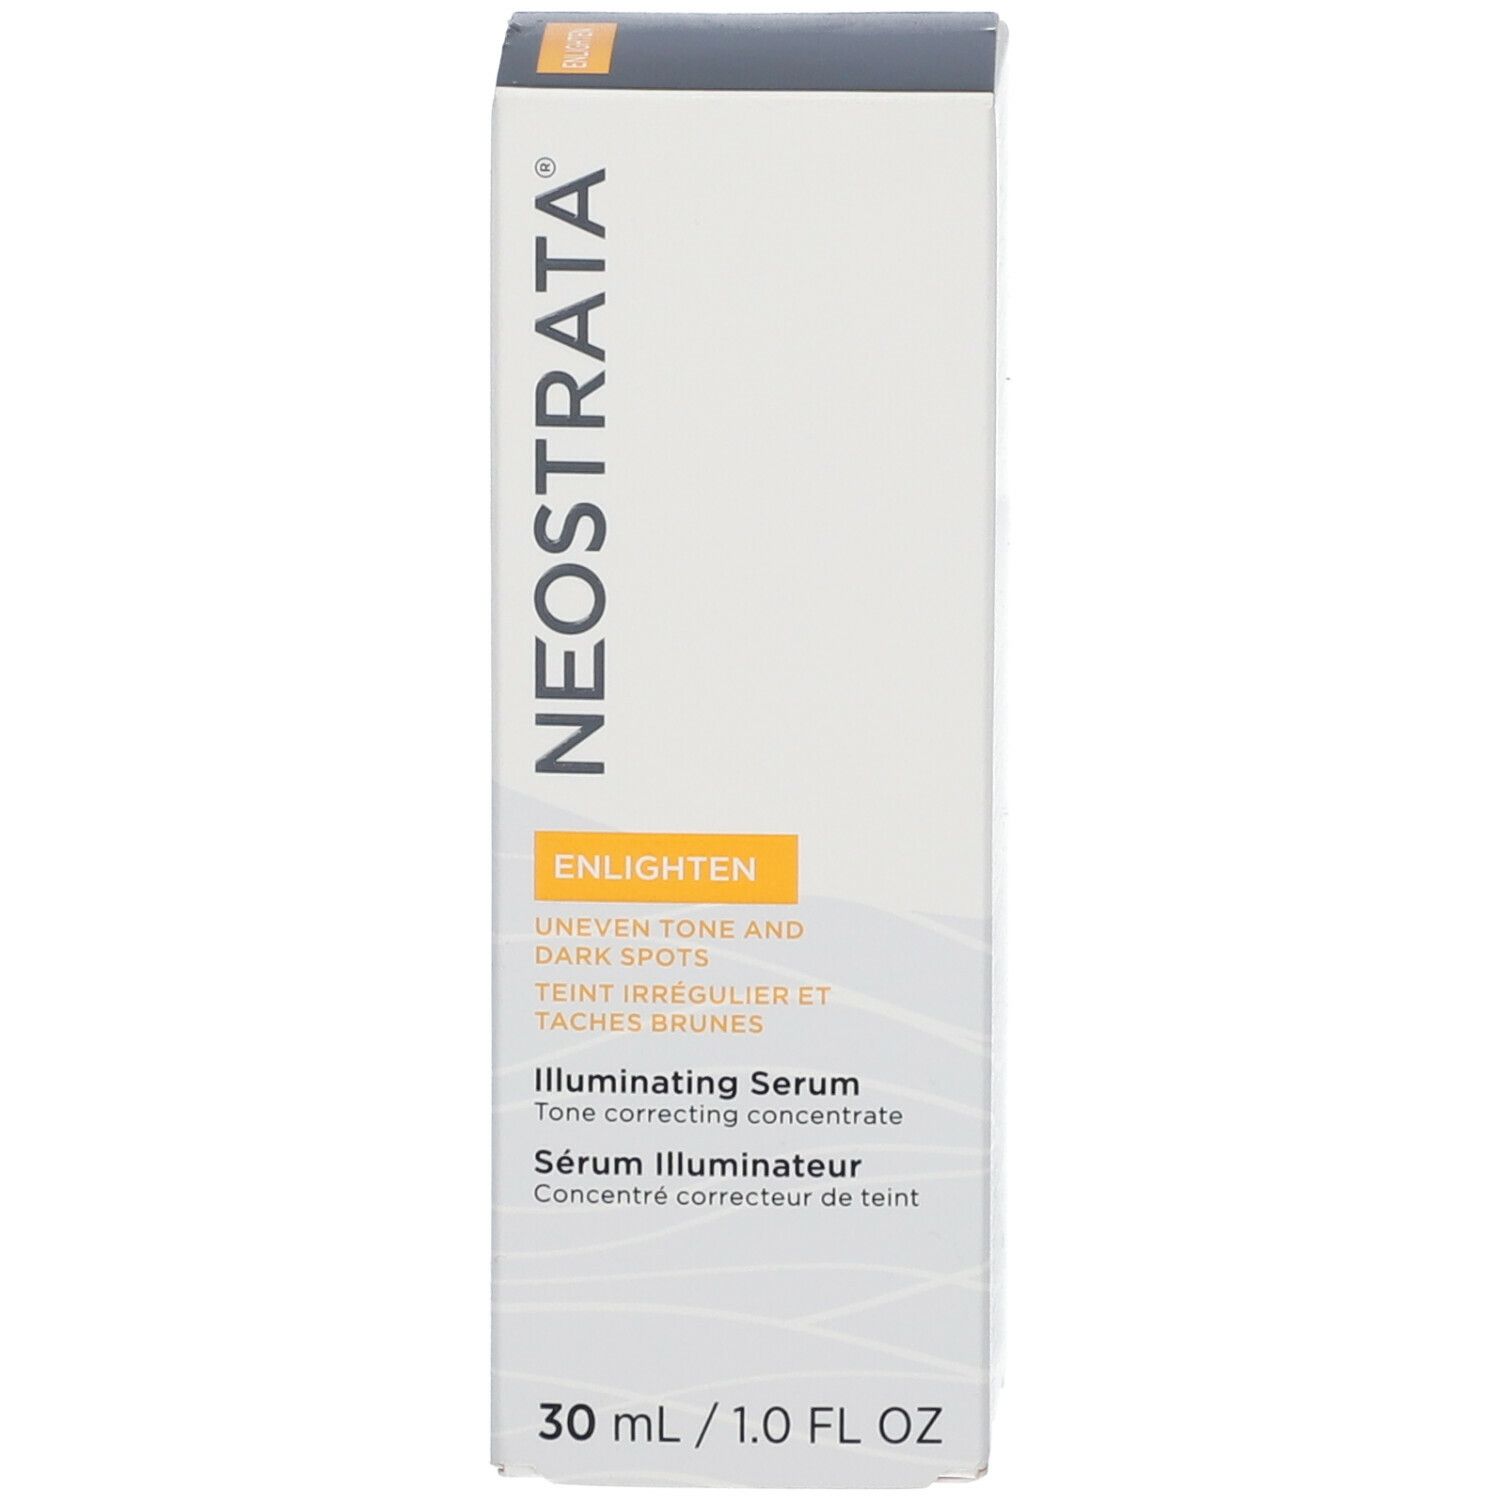 NeoStrata® Enlighten Illuminating Serum